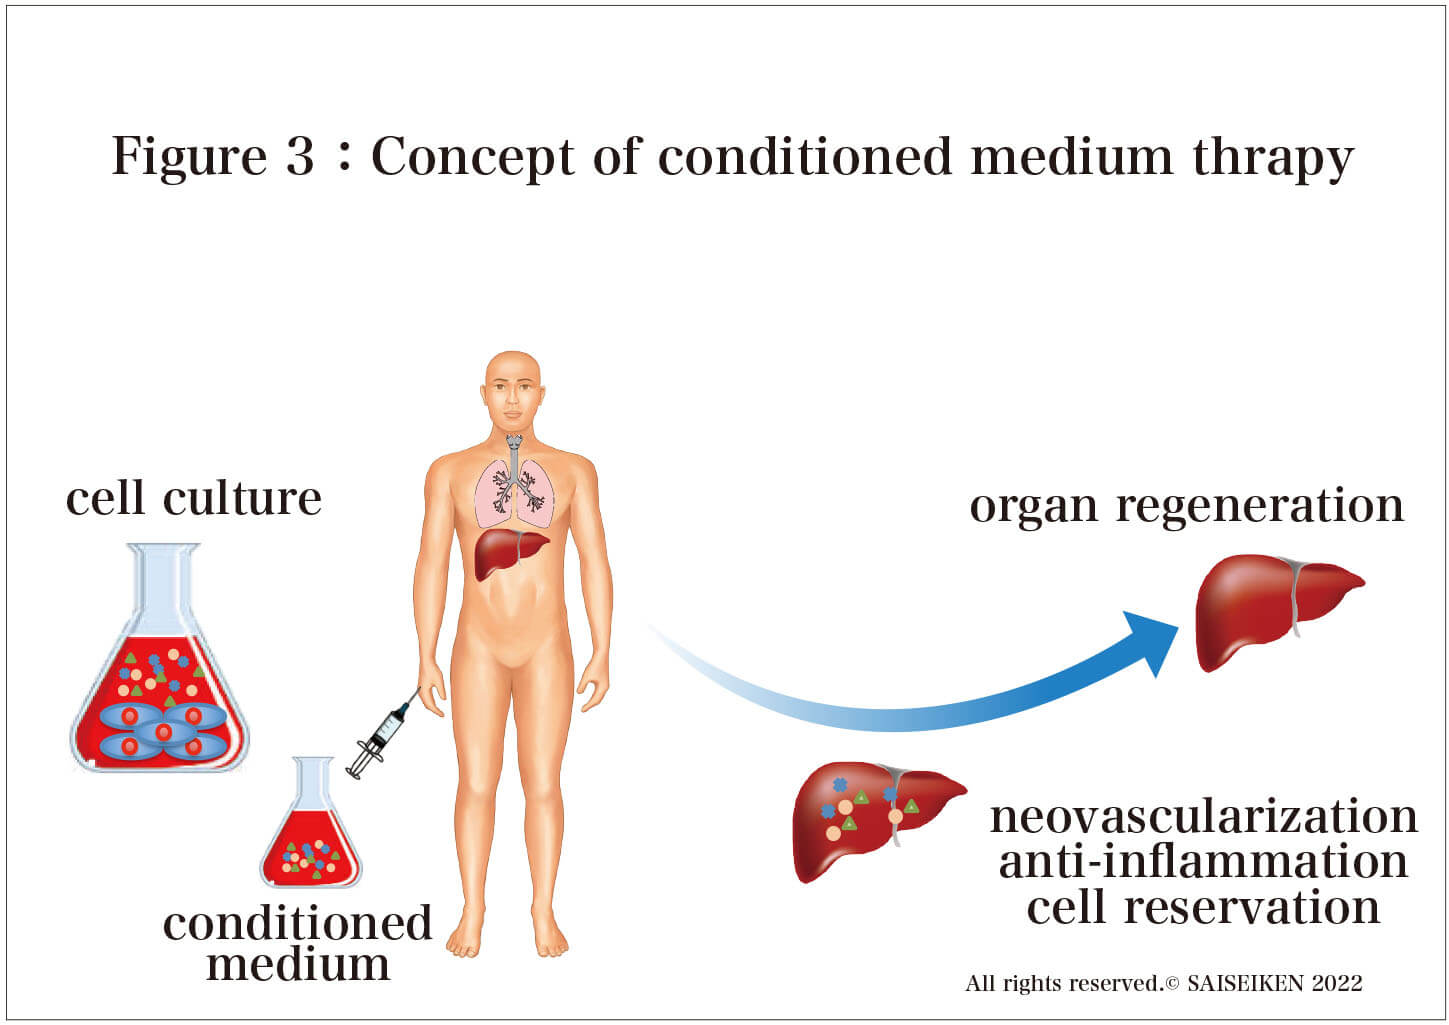 Concept of conditioned medium thrapy